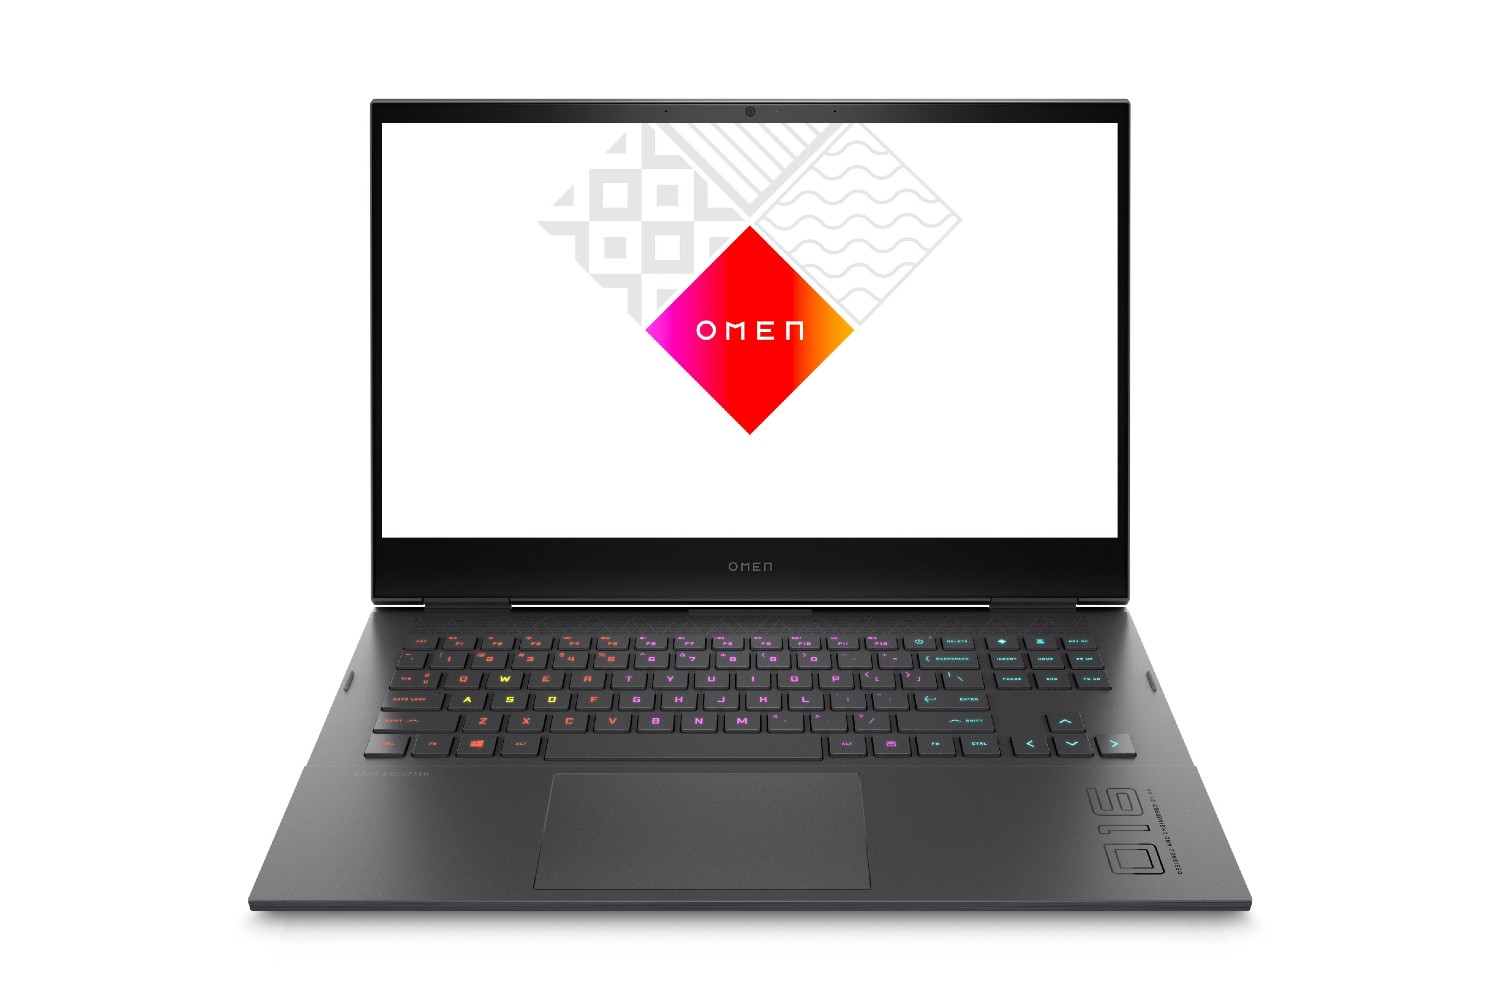 O laptop para jogos HP Omen de 16,1 polegadas com o logotipo Omen na tela.